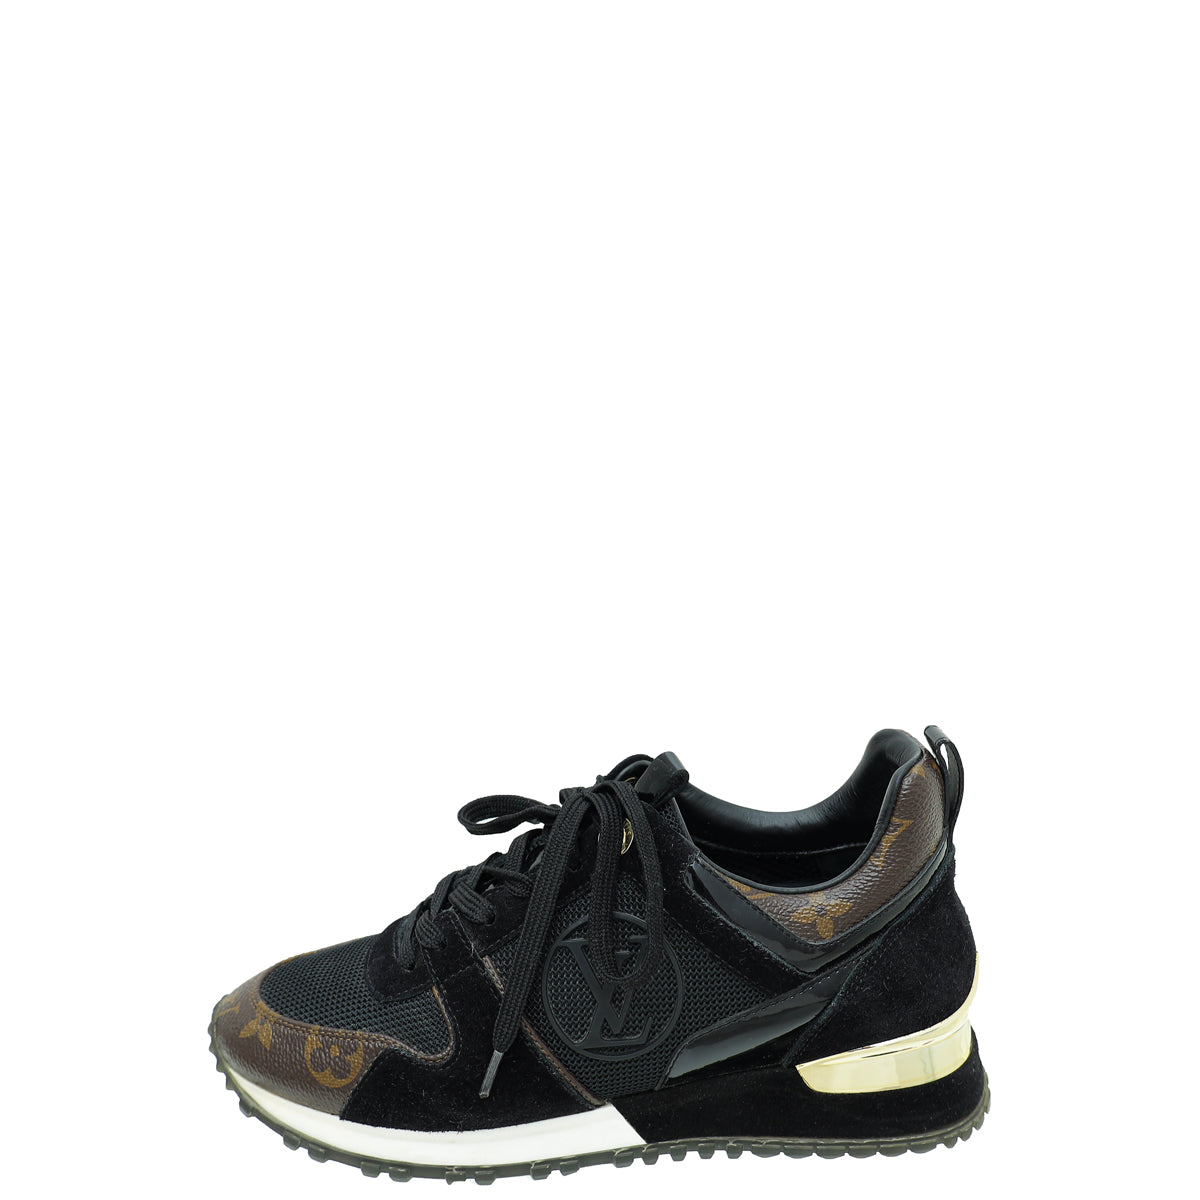 louis-vuitton run away sneakers black Monogram